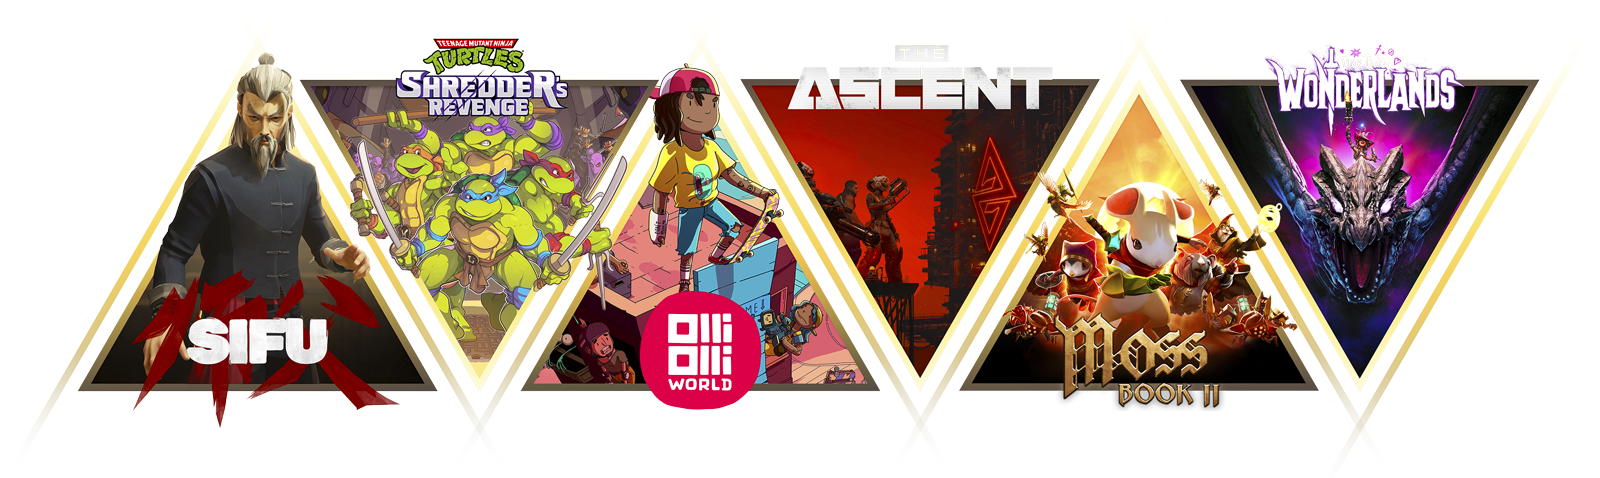 Yhteiskuva, jossa näkyvät pelit Sifu, Teenage Mutant Ninja Turtles: Shredder's Revenge, OlliOlli World, The Ascent, Moss: Book II ja Tiny Tina's Wonderlands.